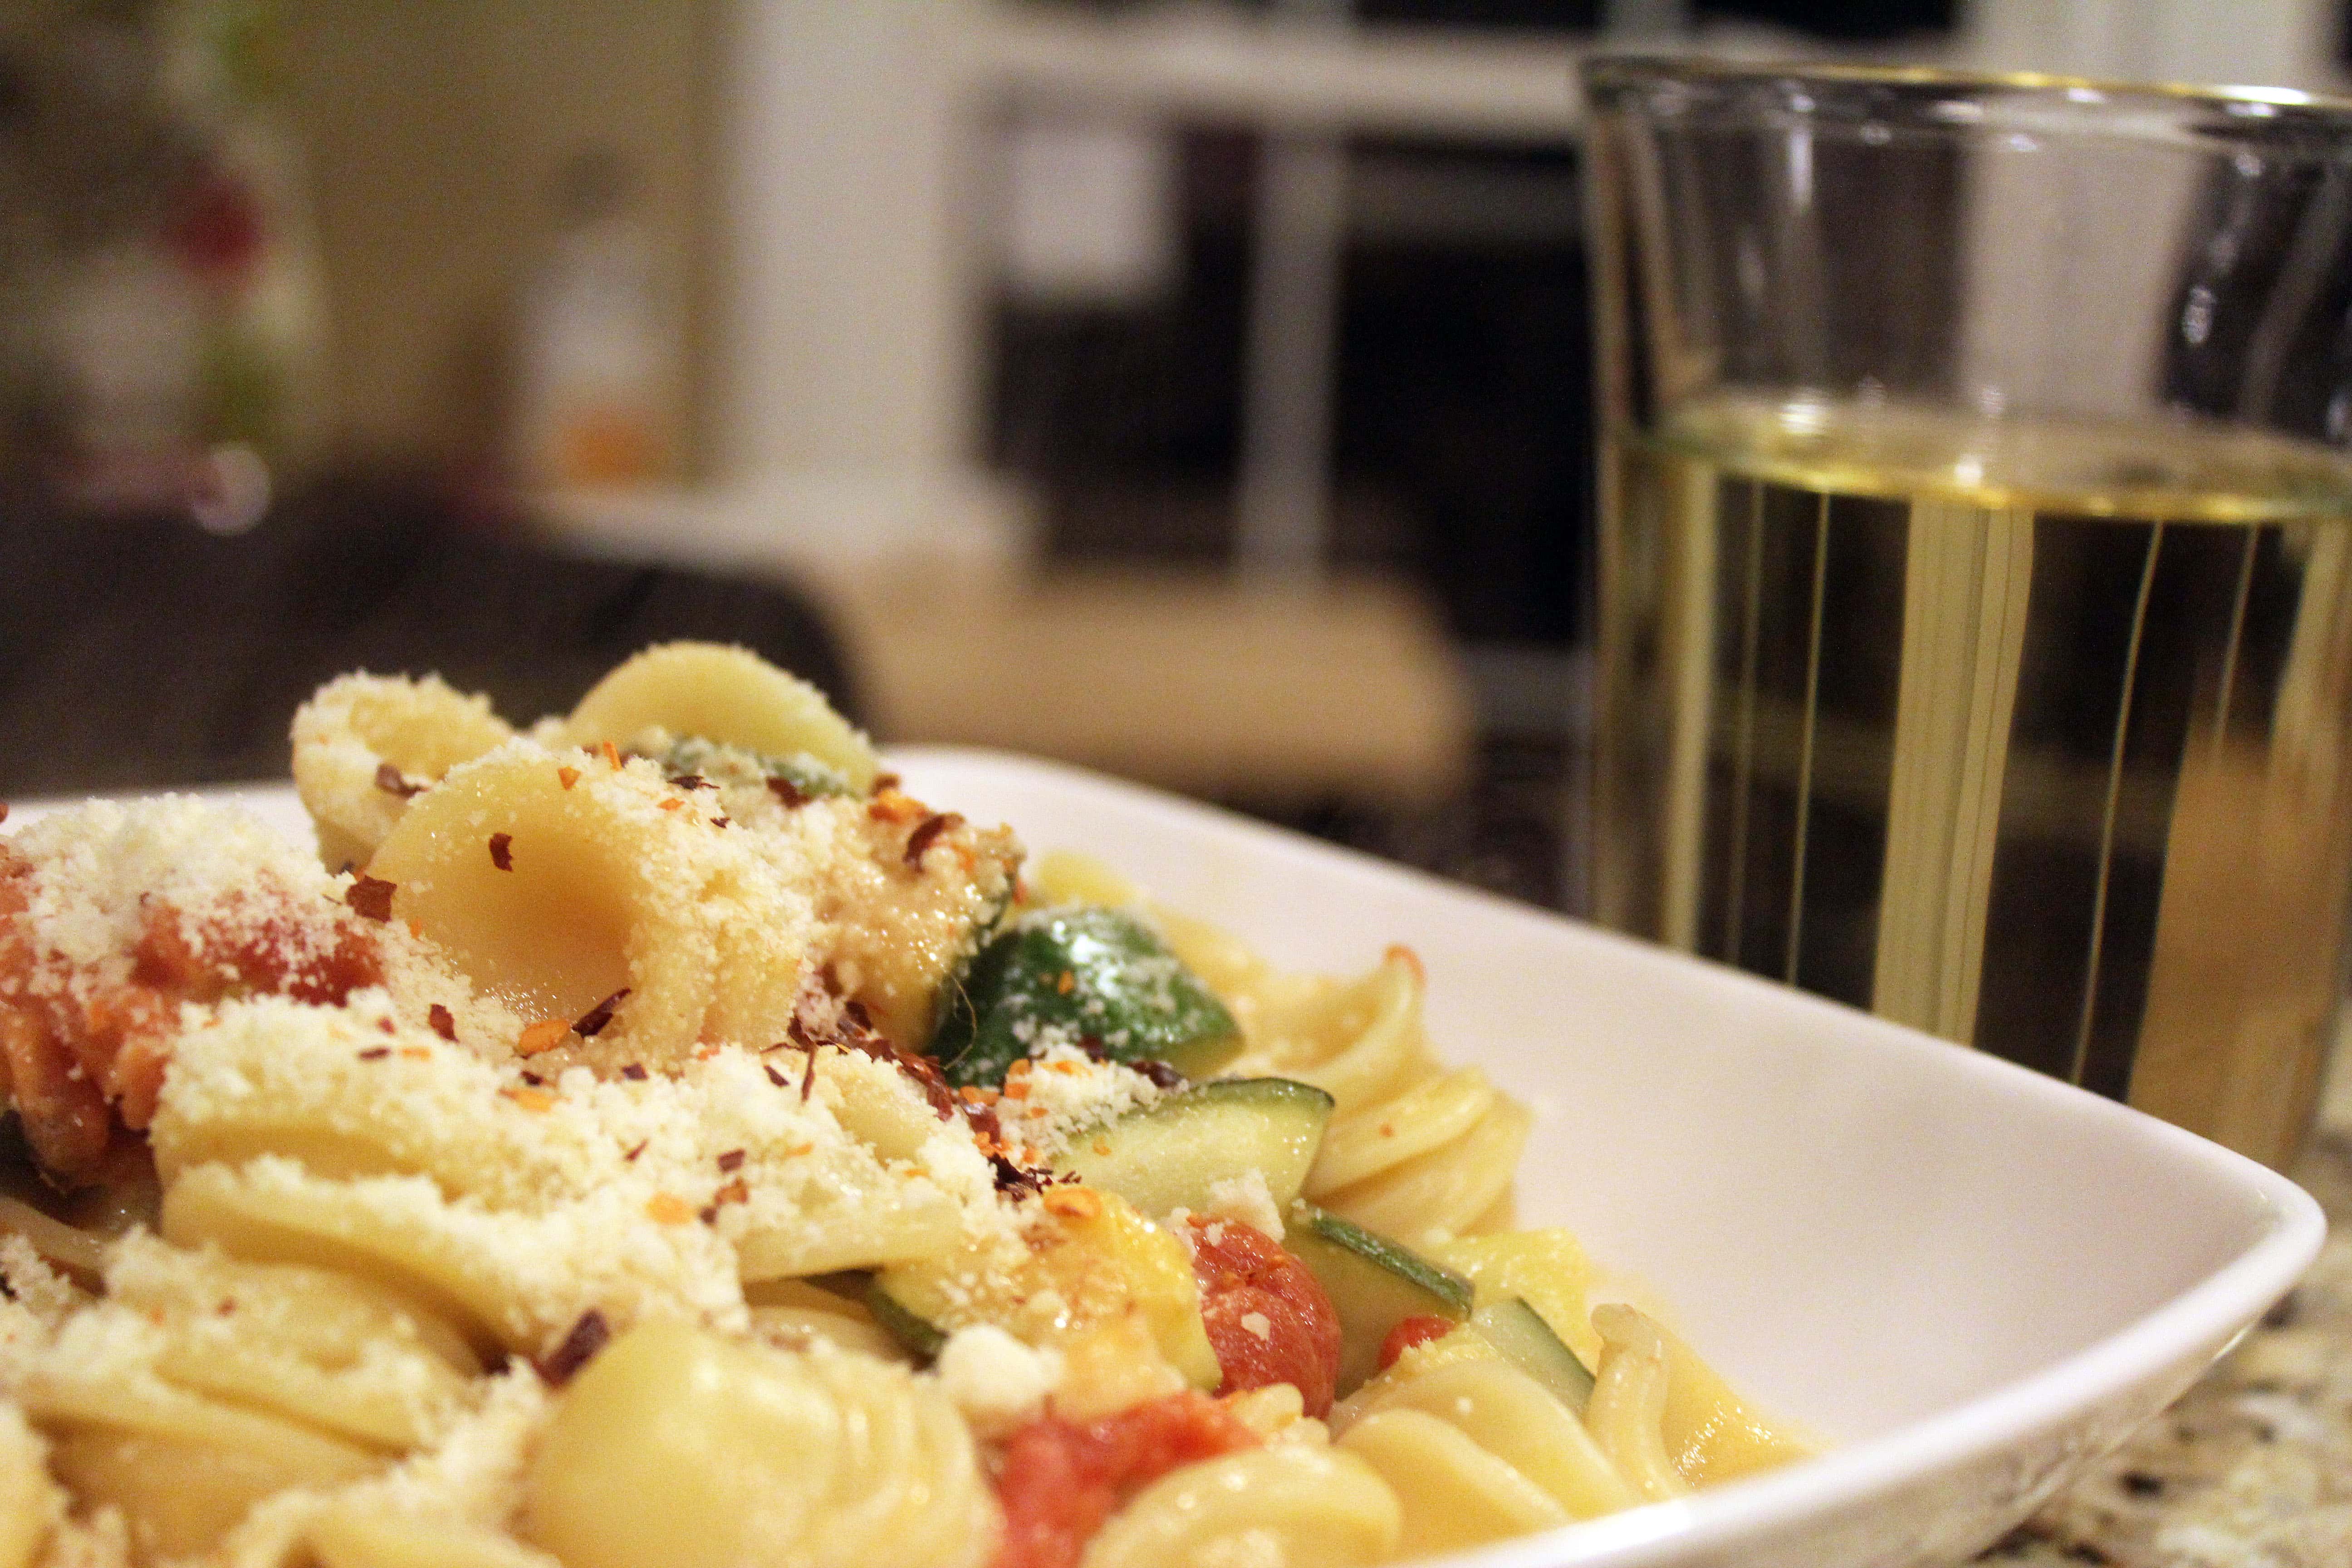 Serve pasta with wine